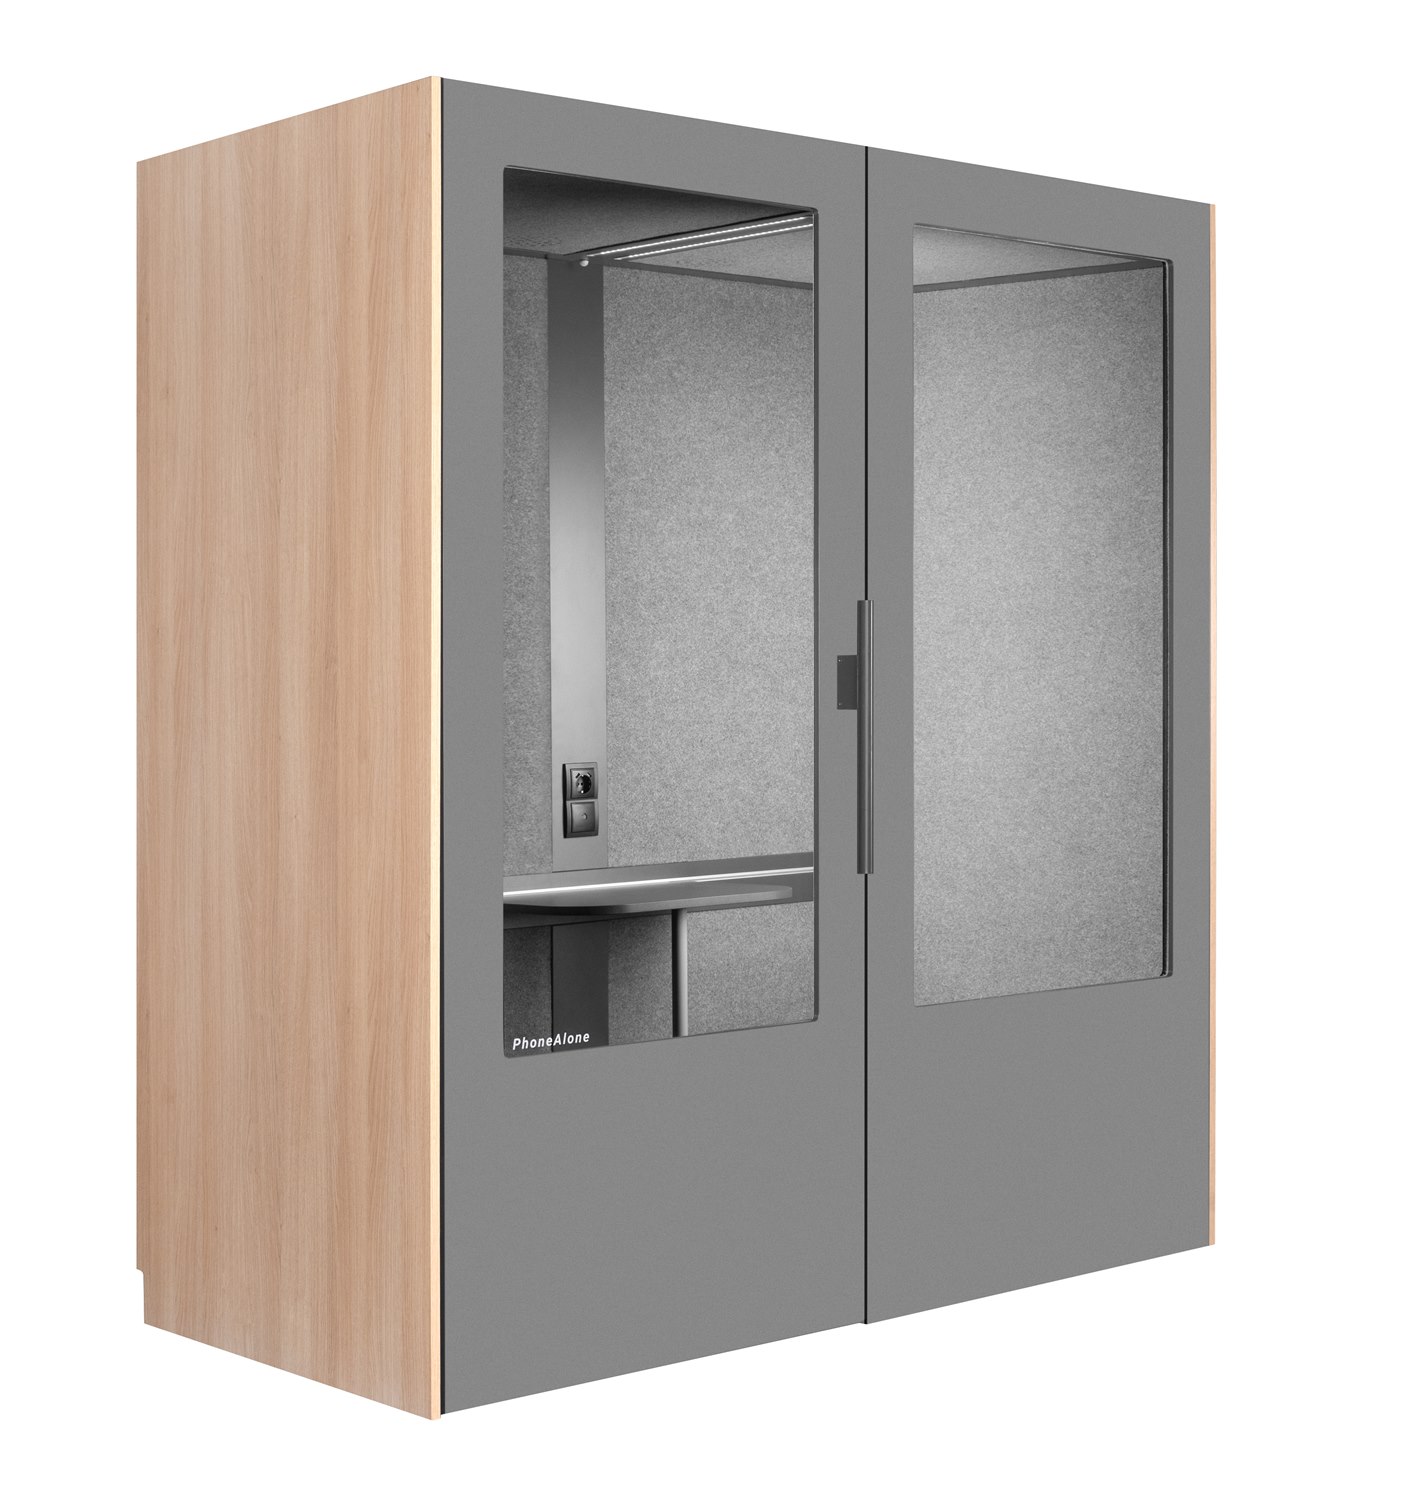 Dubbelbox tyst rum automatiskt desinfektion ek med grå dörr